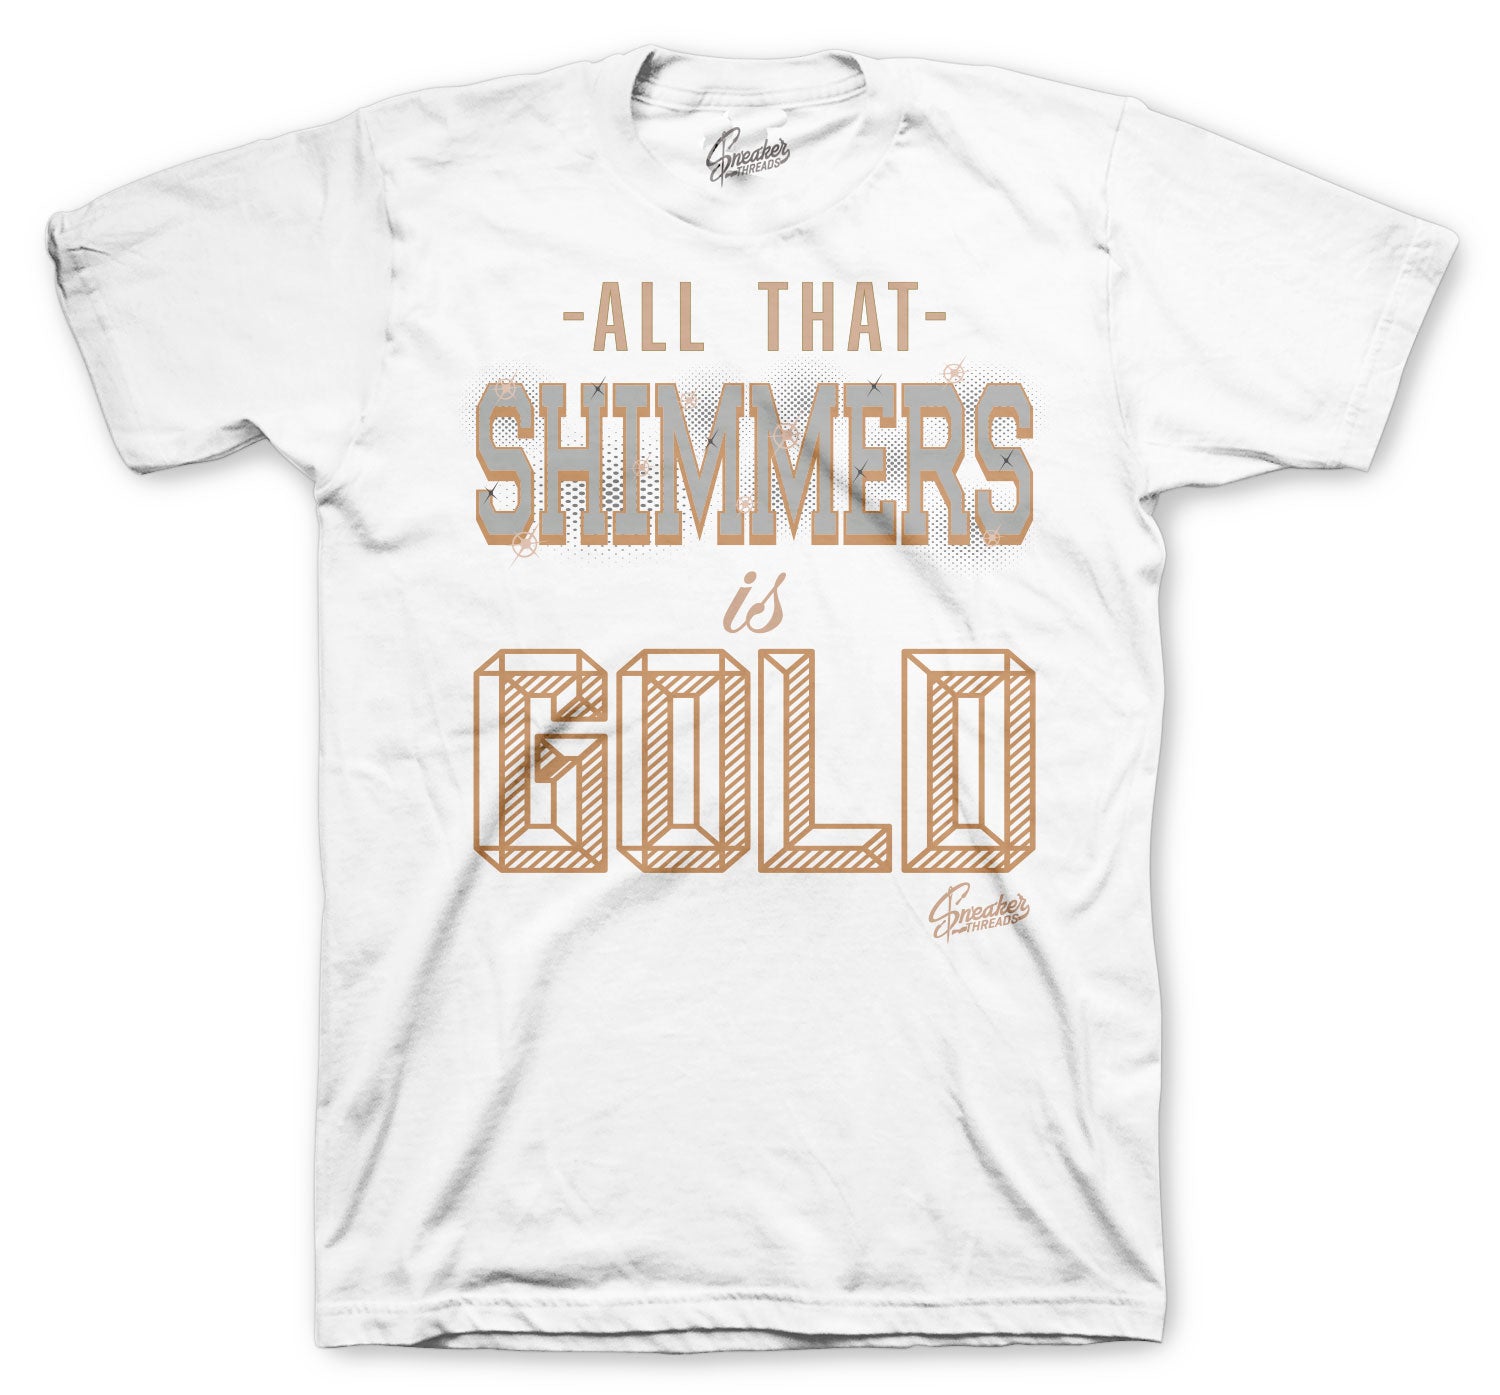 Retro 4 Shimmer Shirt - Gold - White